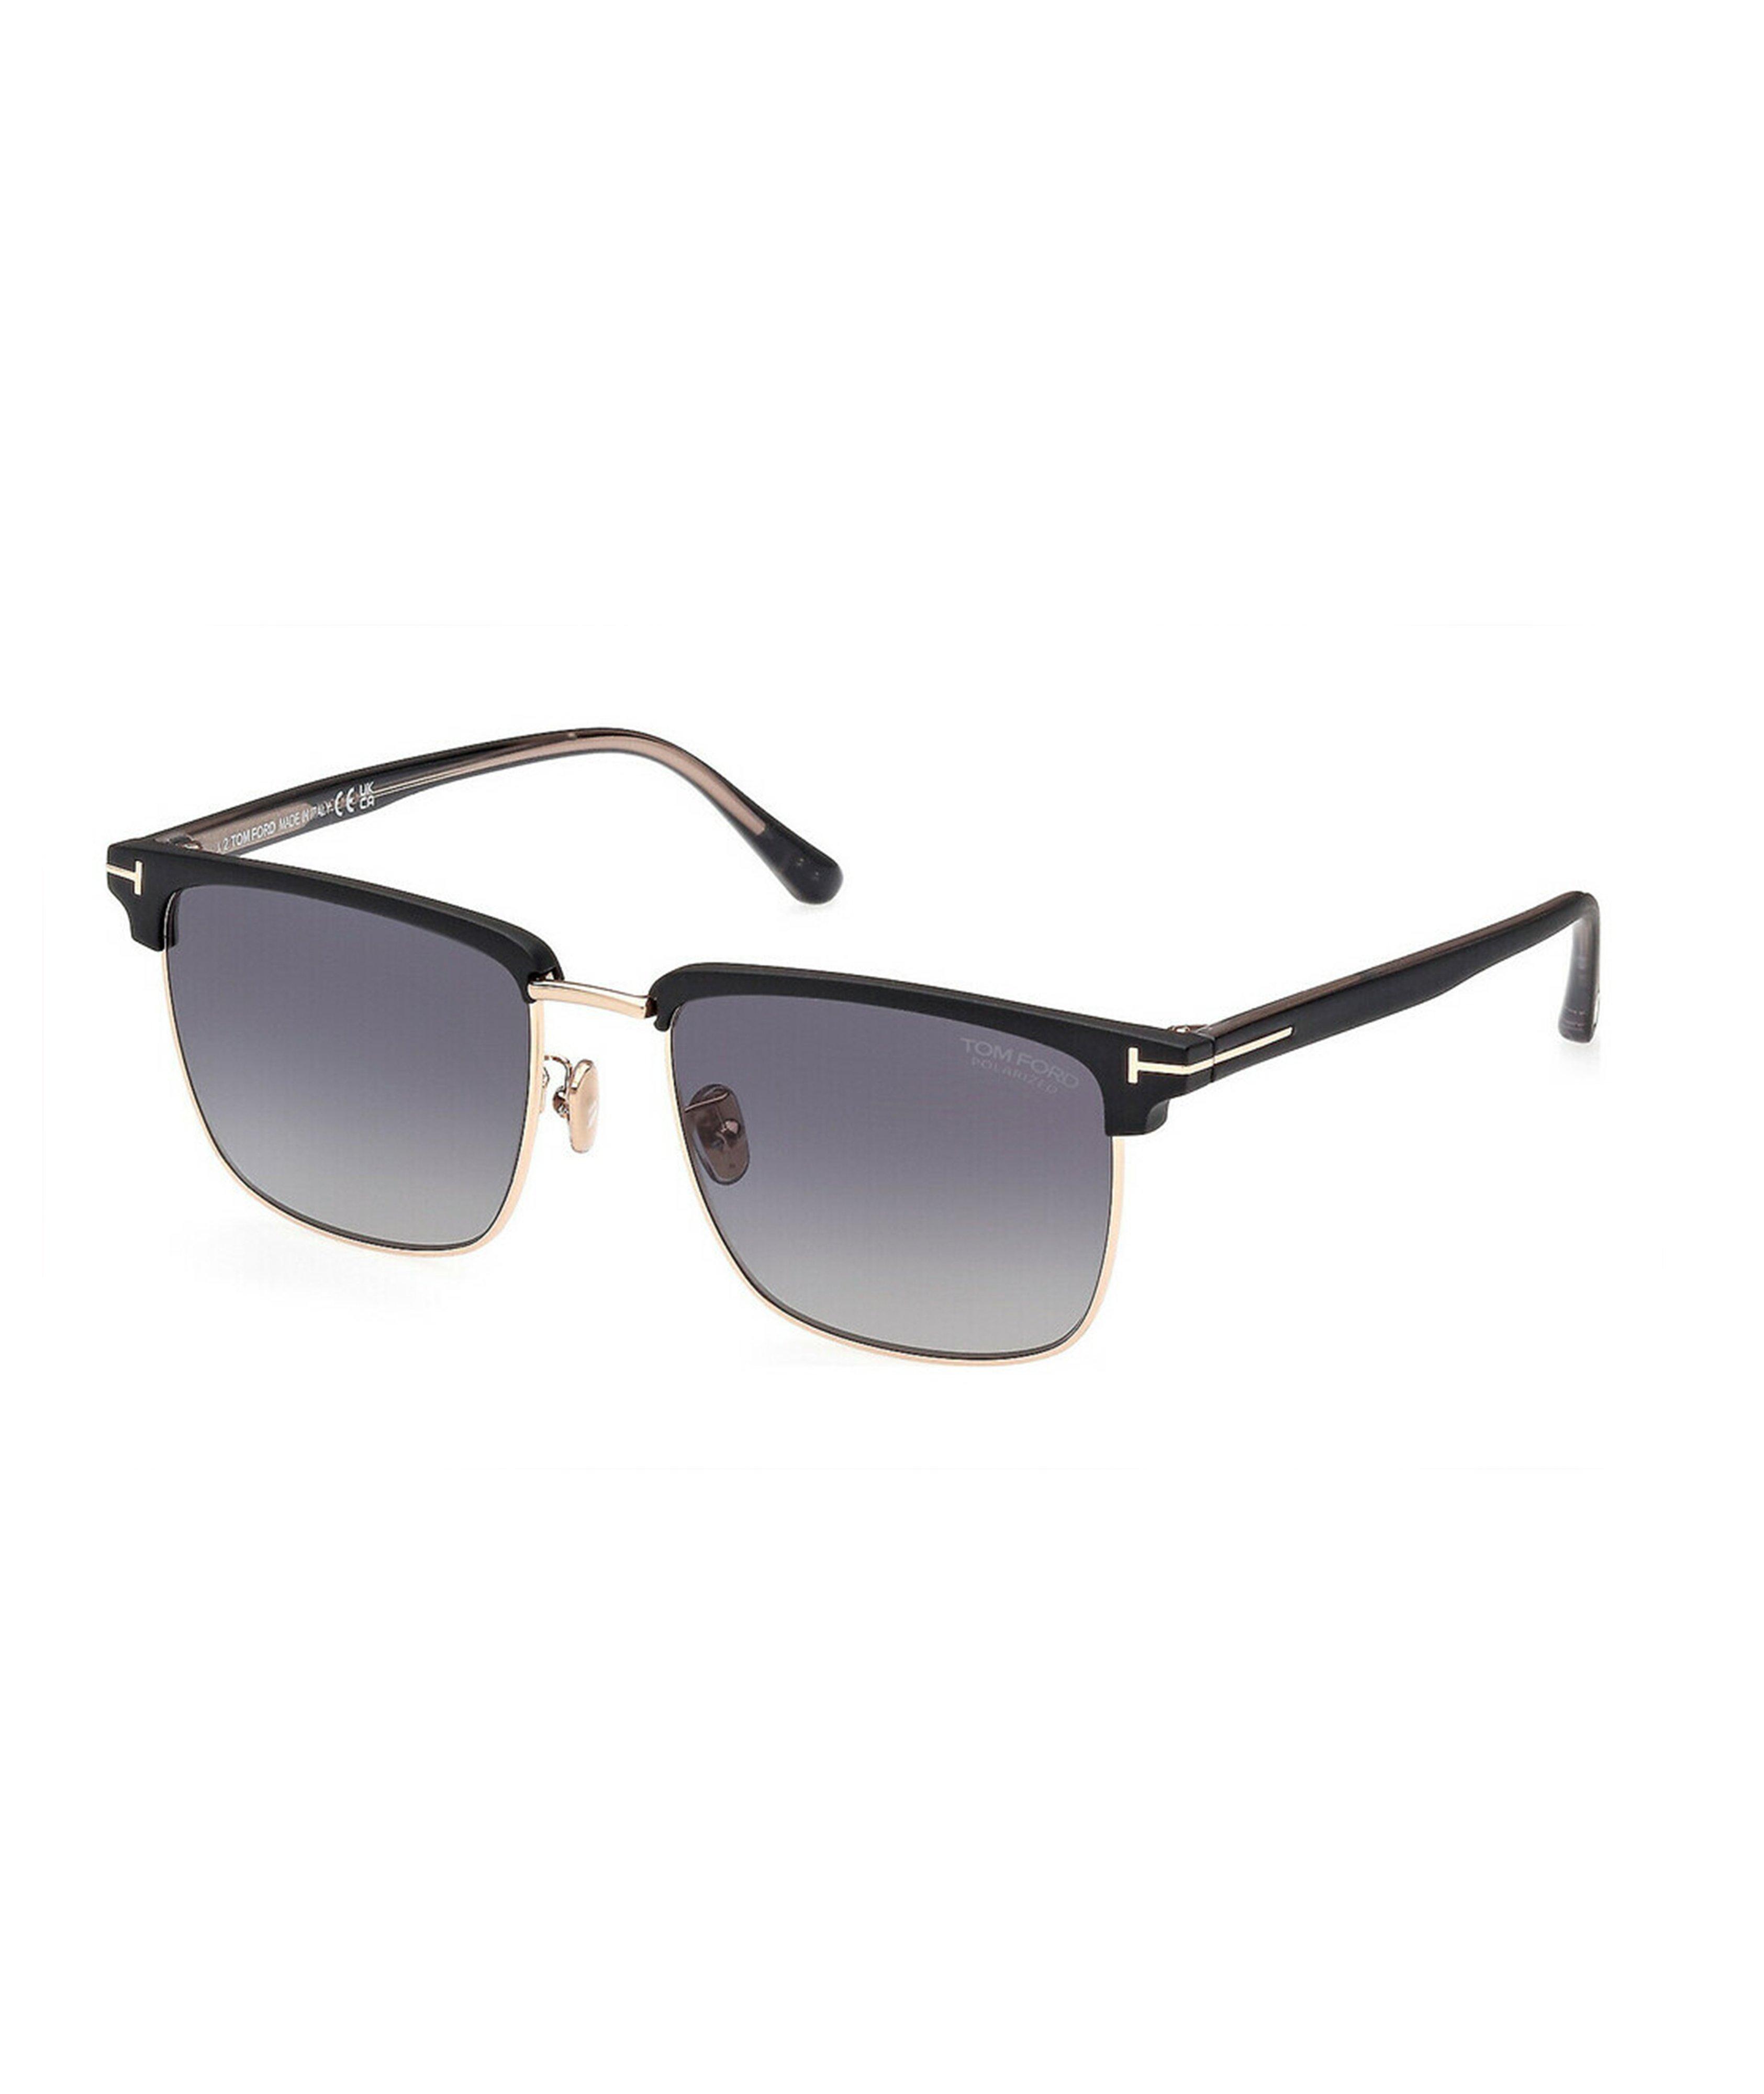 Hudson Square Clubmaster Frame Sunglasses image 0